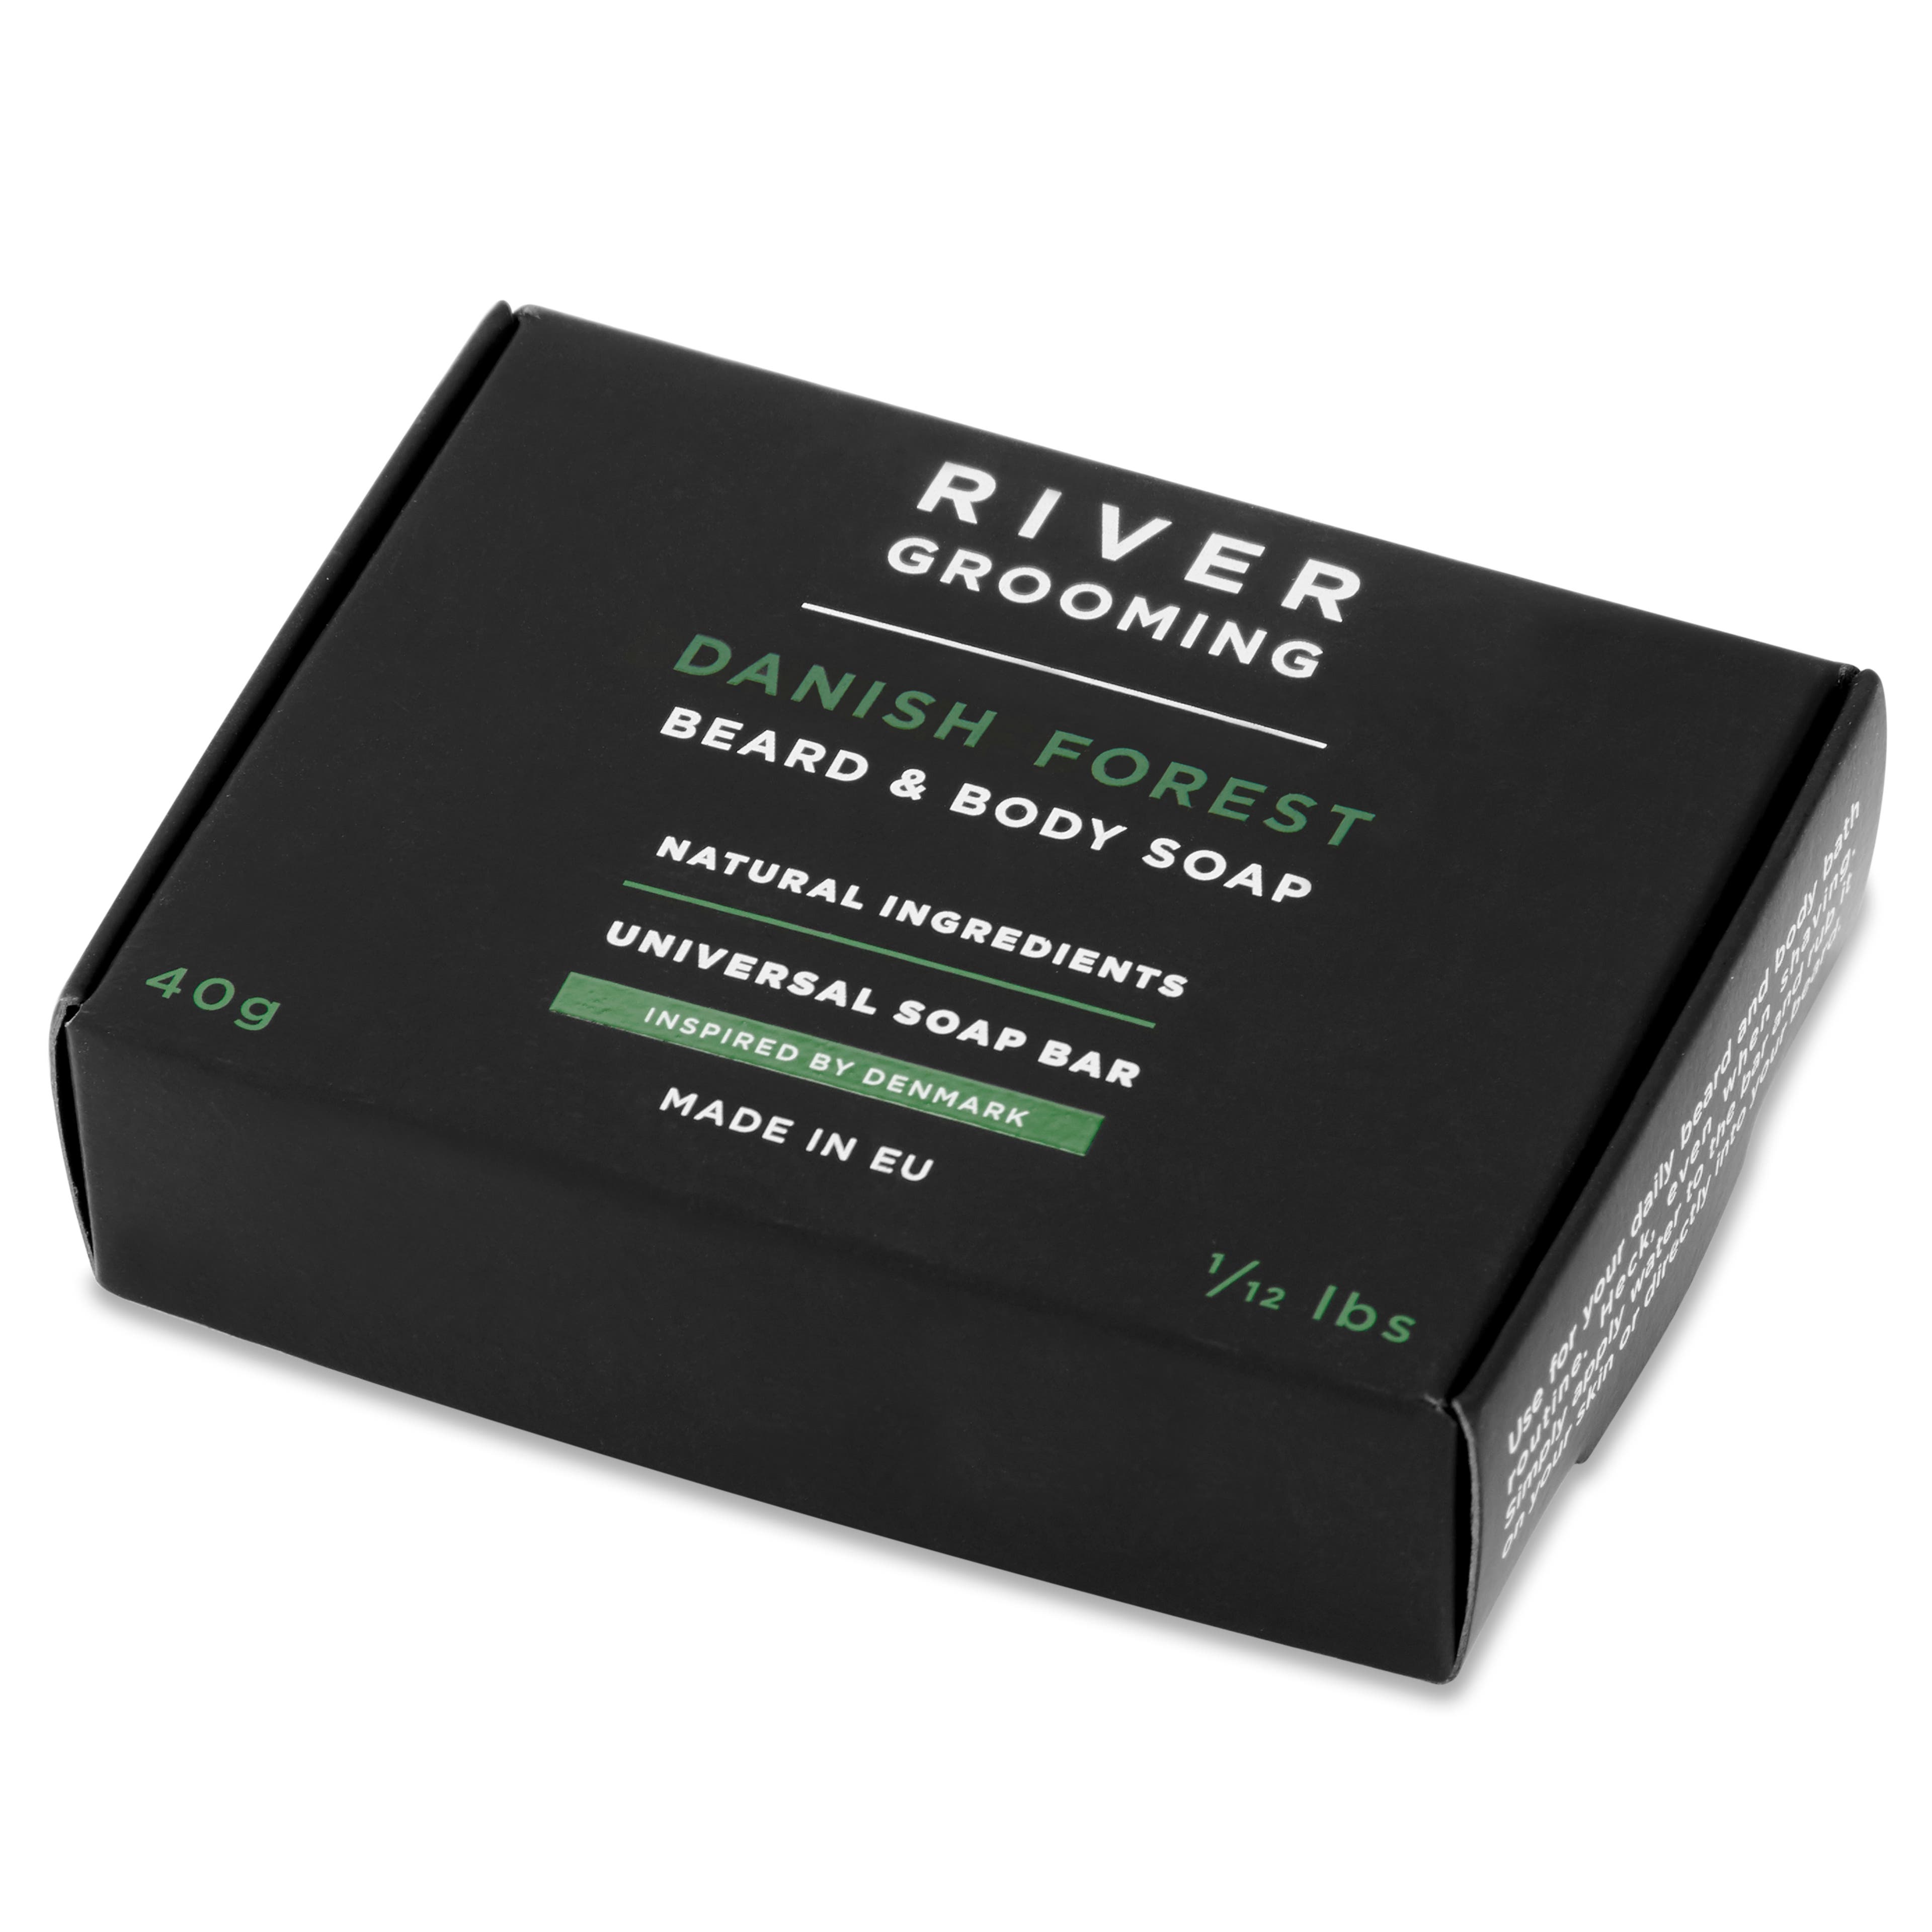 40 g Danish Forest Beard & Body Soap